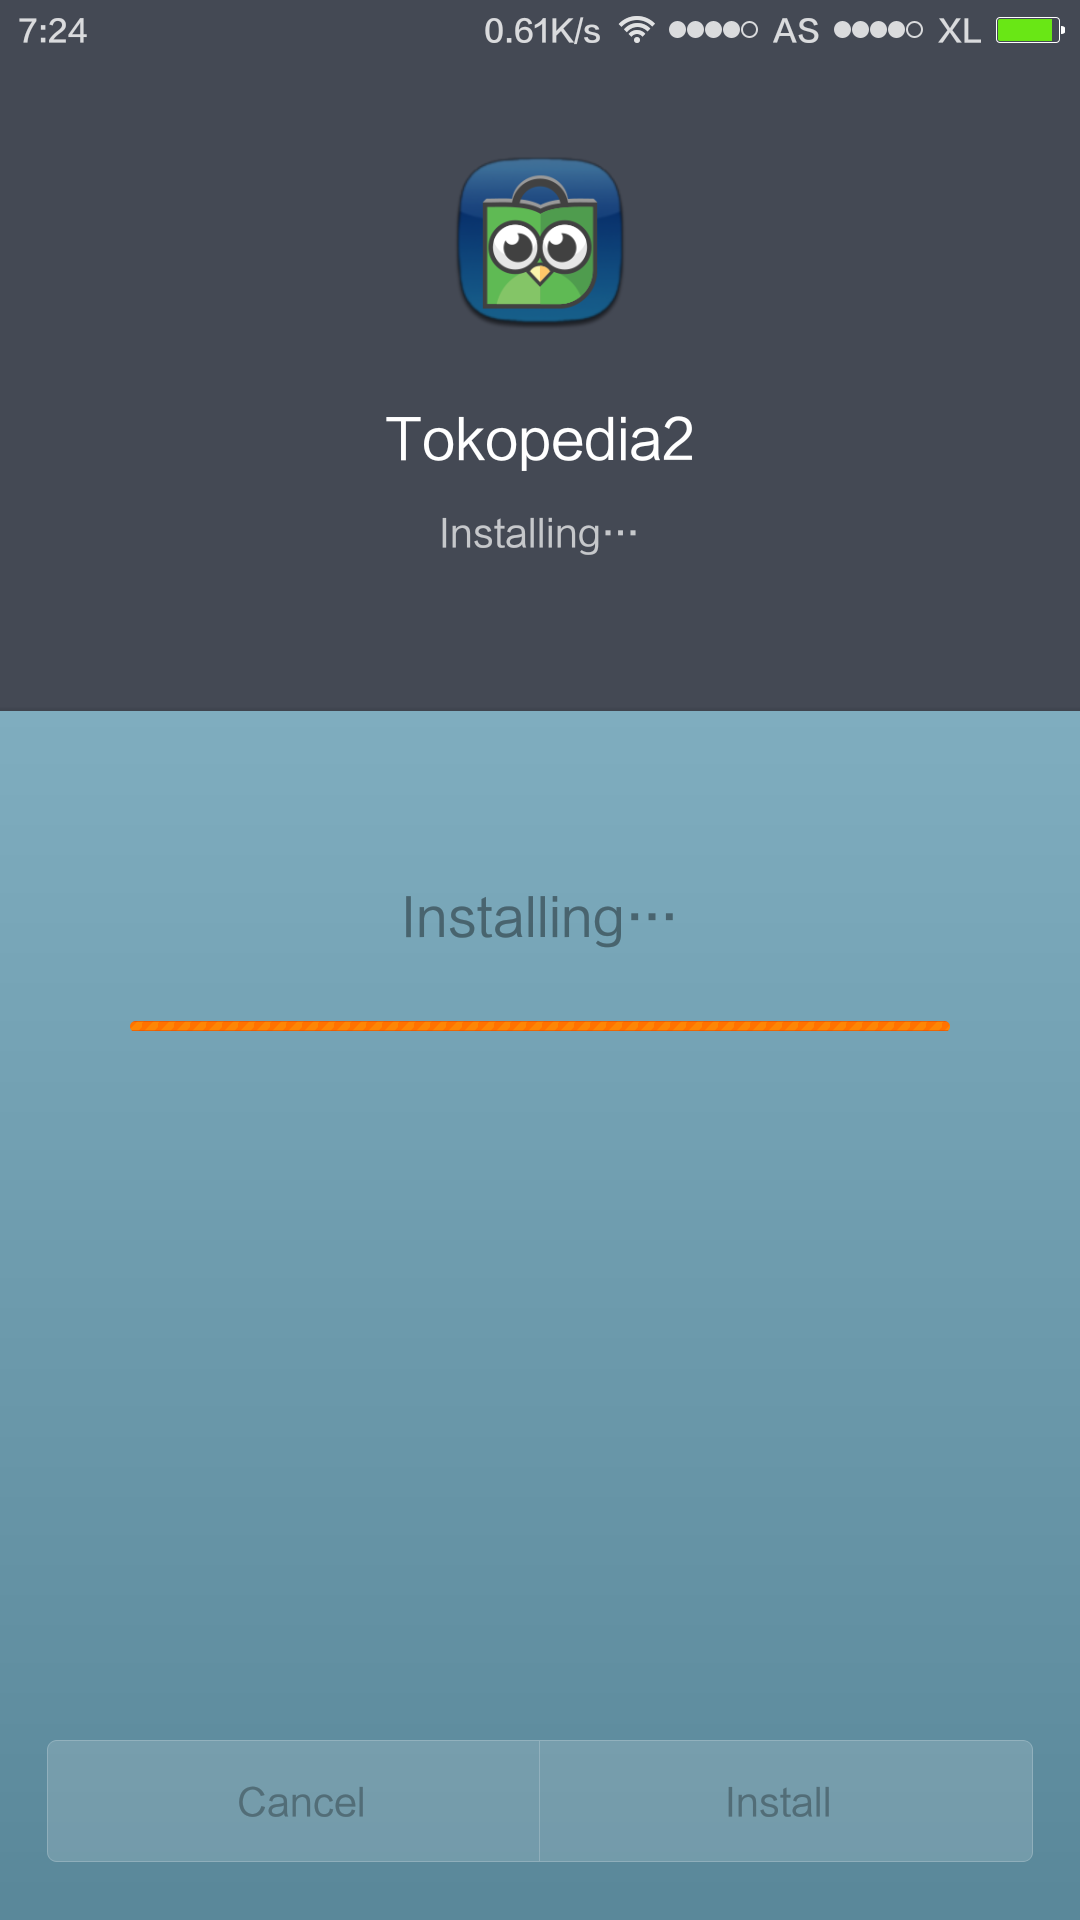 Tokopedia2 v2.2.1 apk